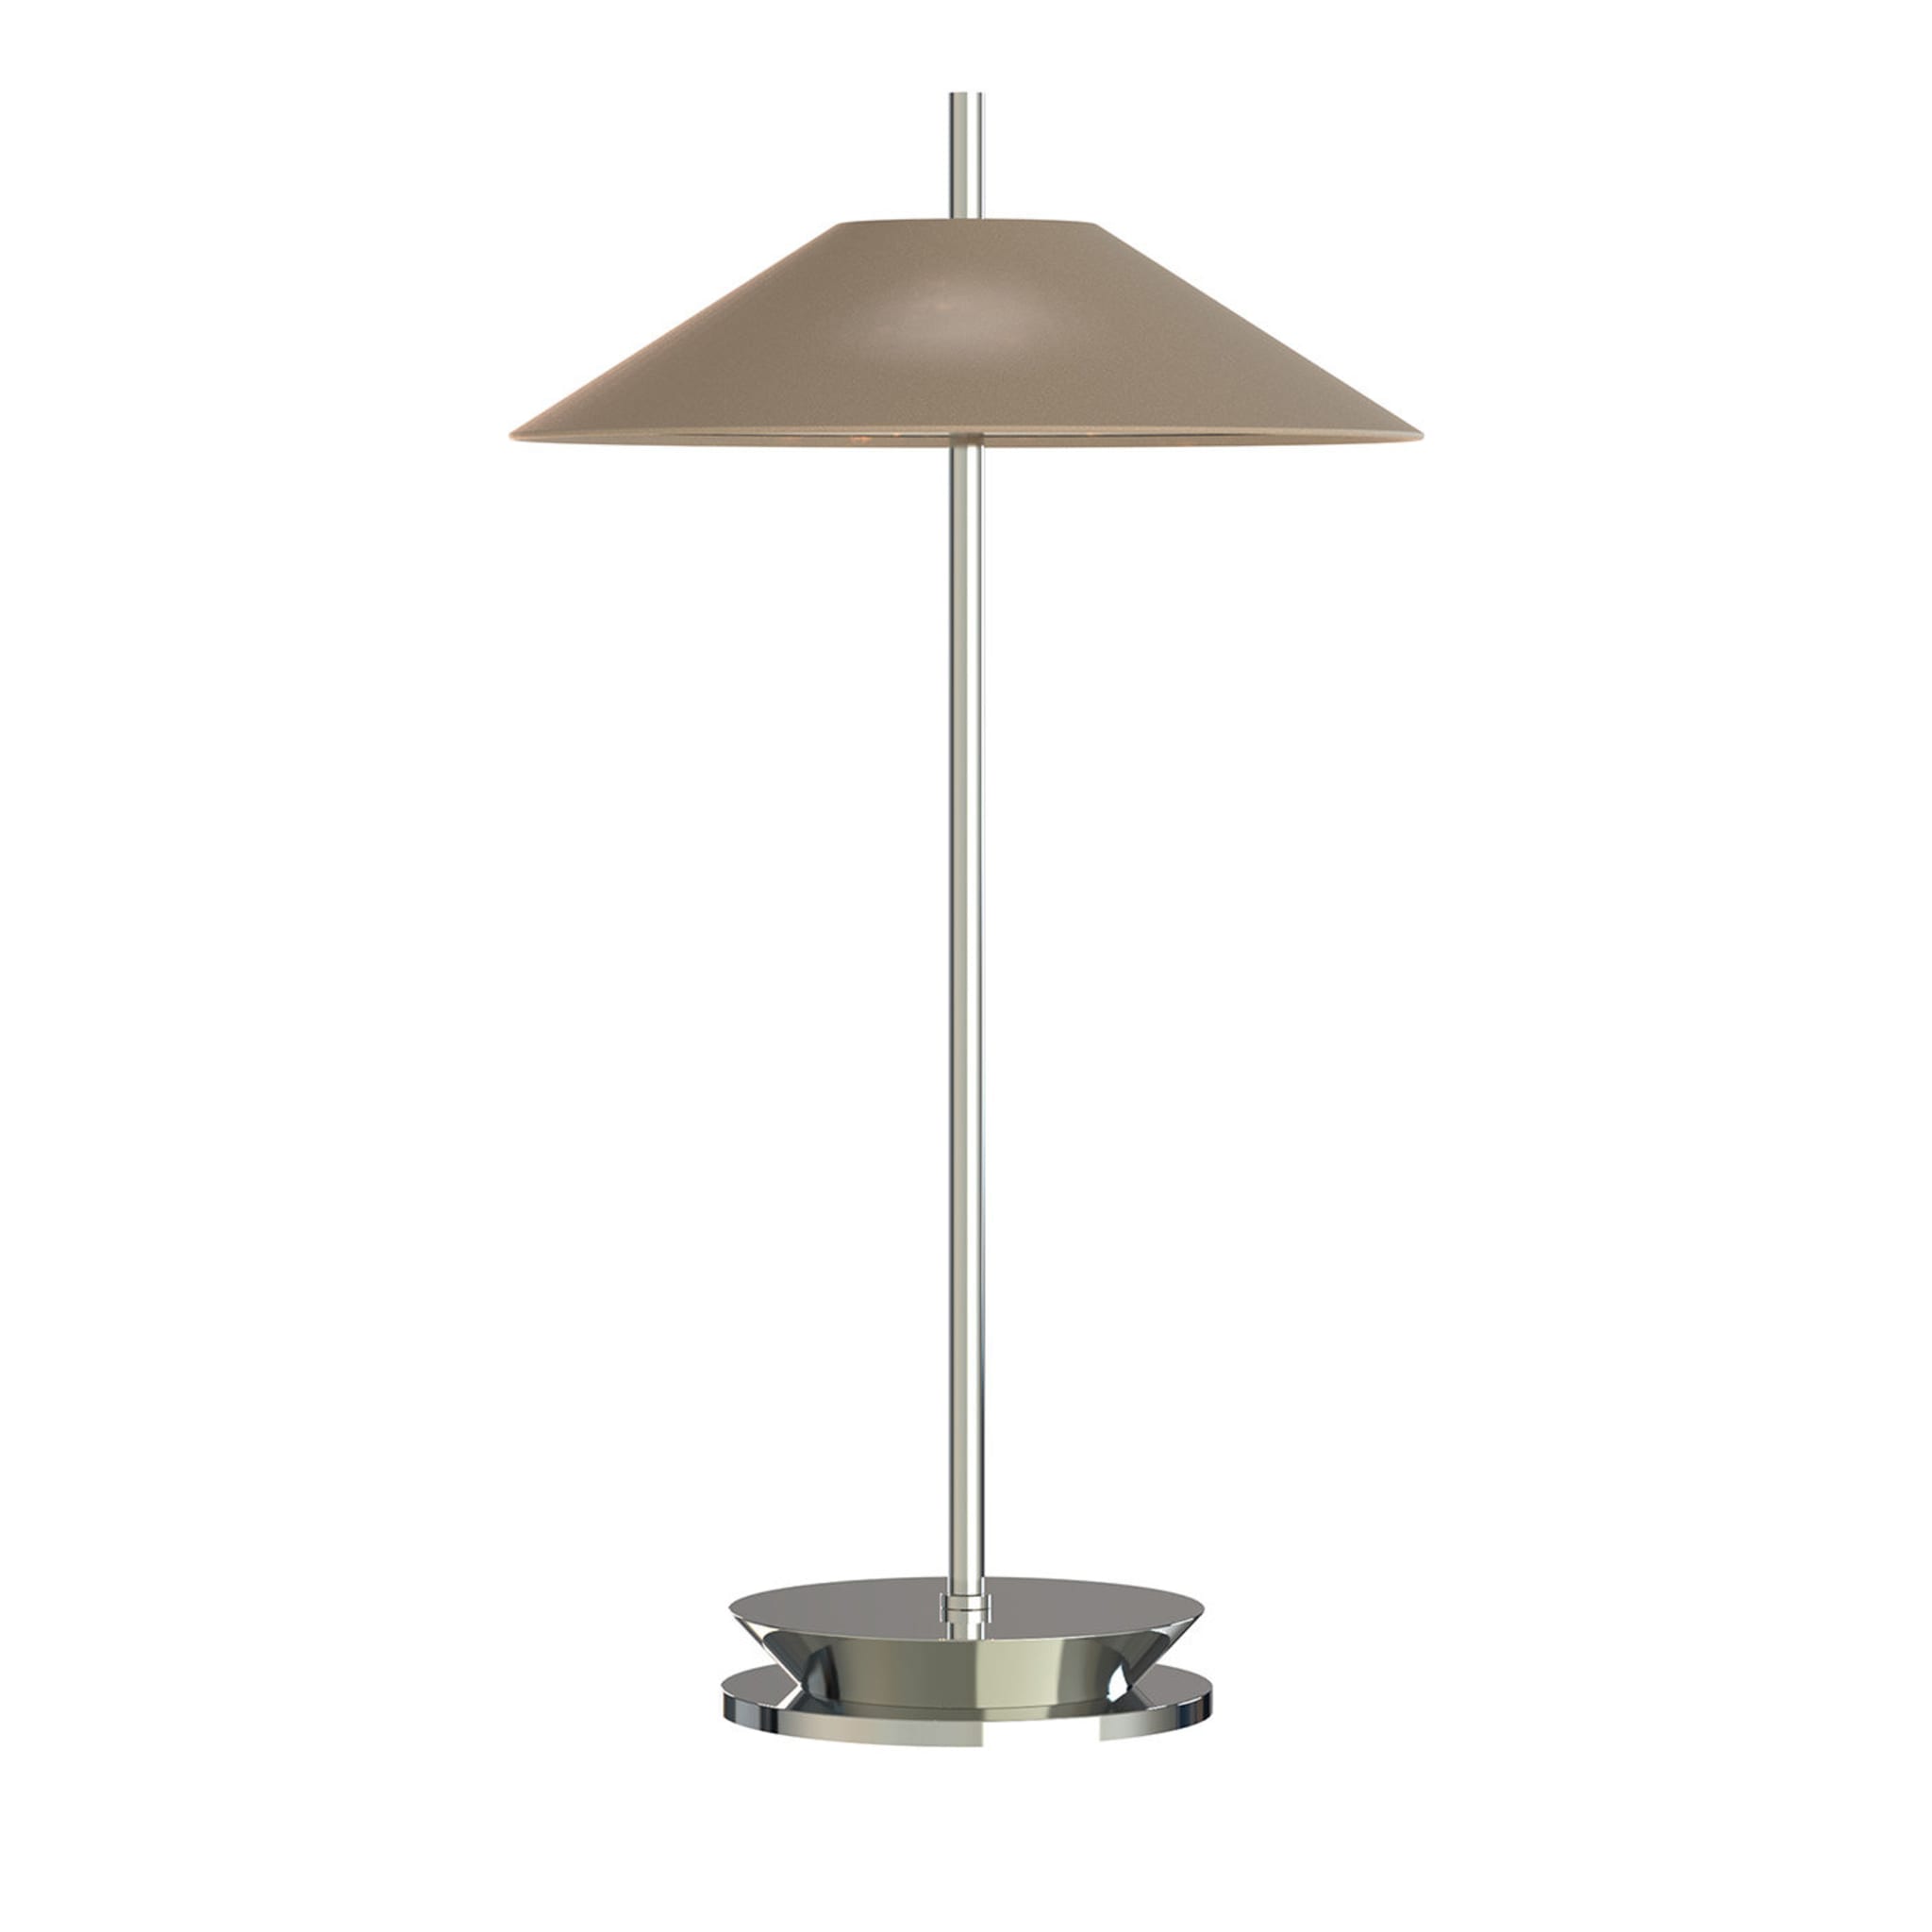 Rodio Table Lamp - Main view